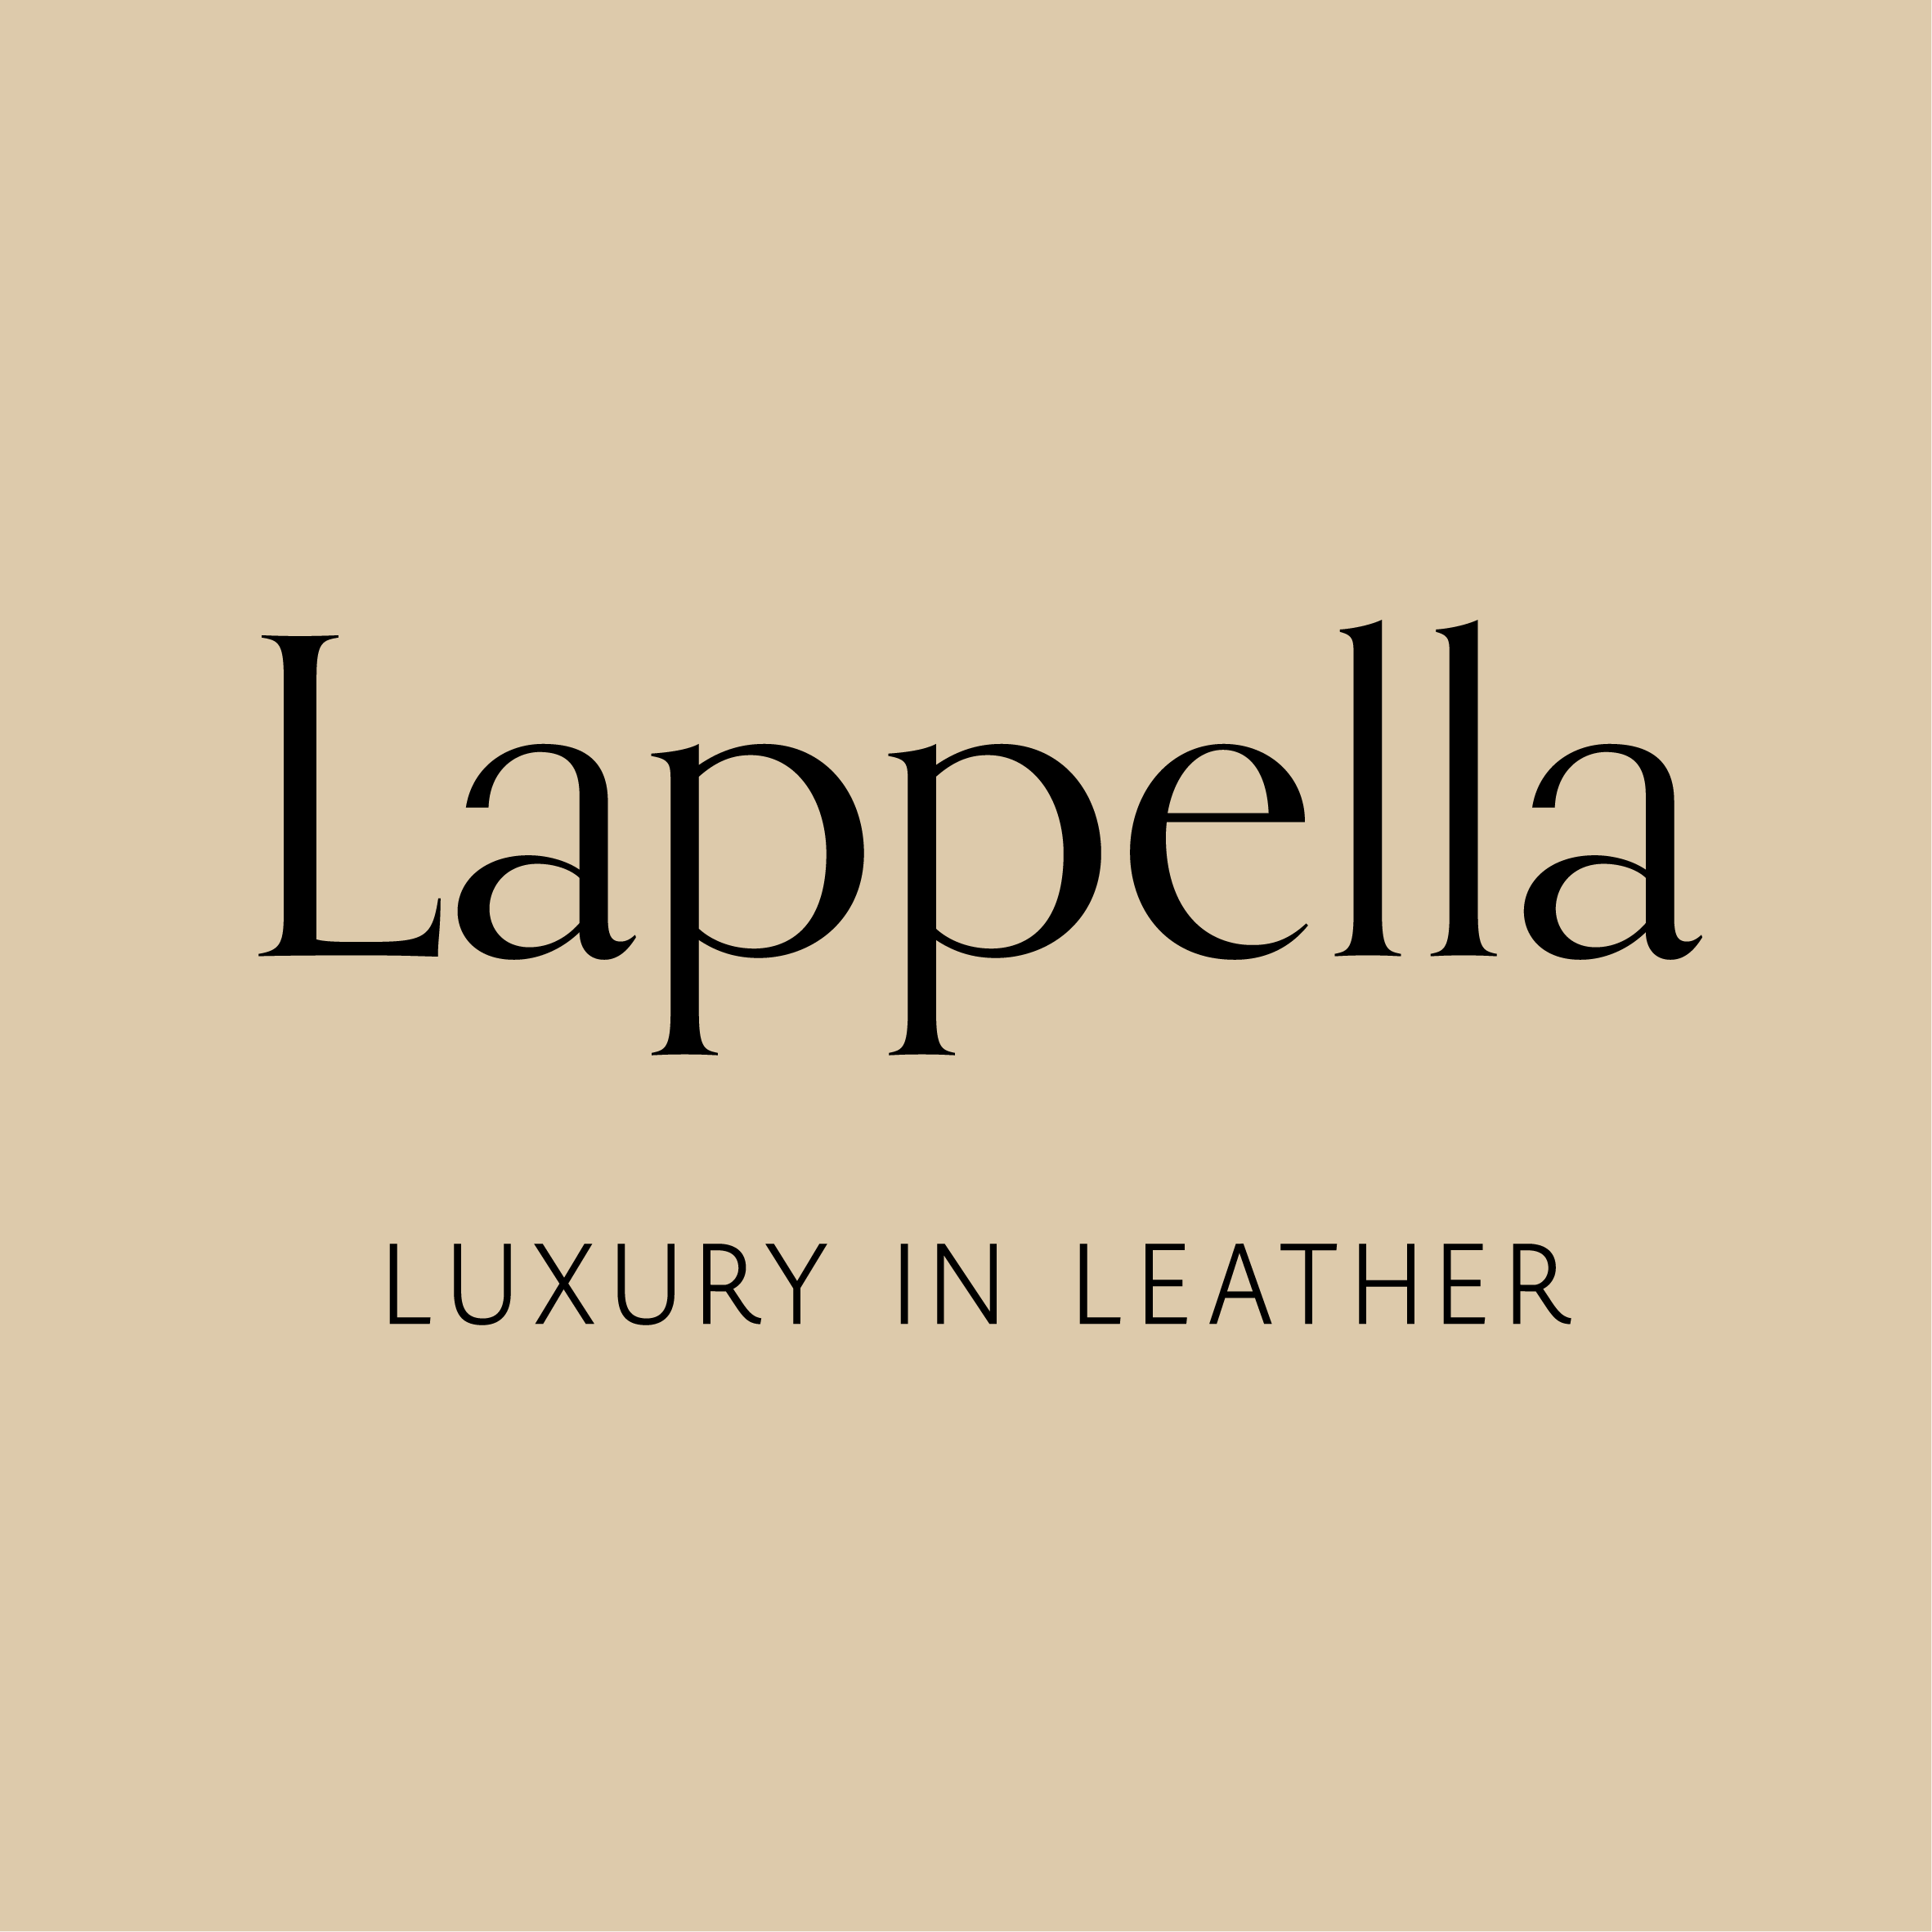 Lappella Ltd